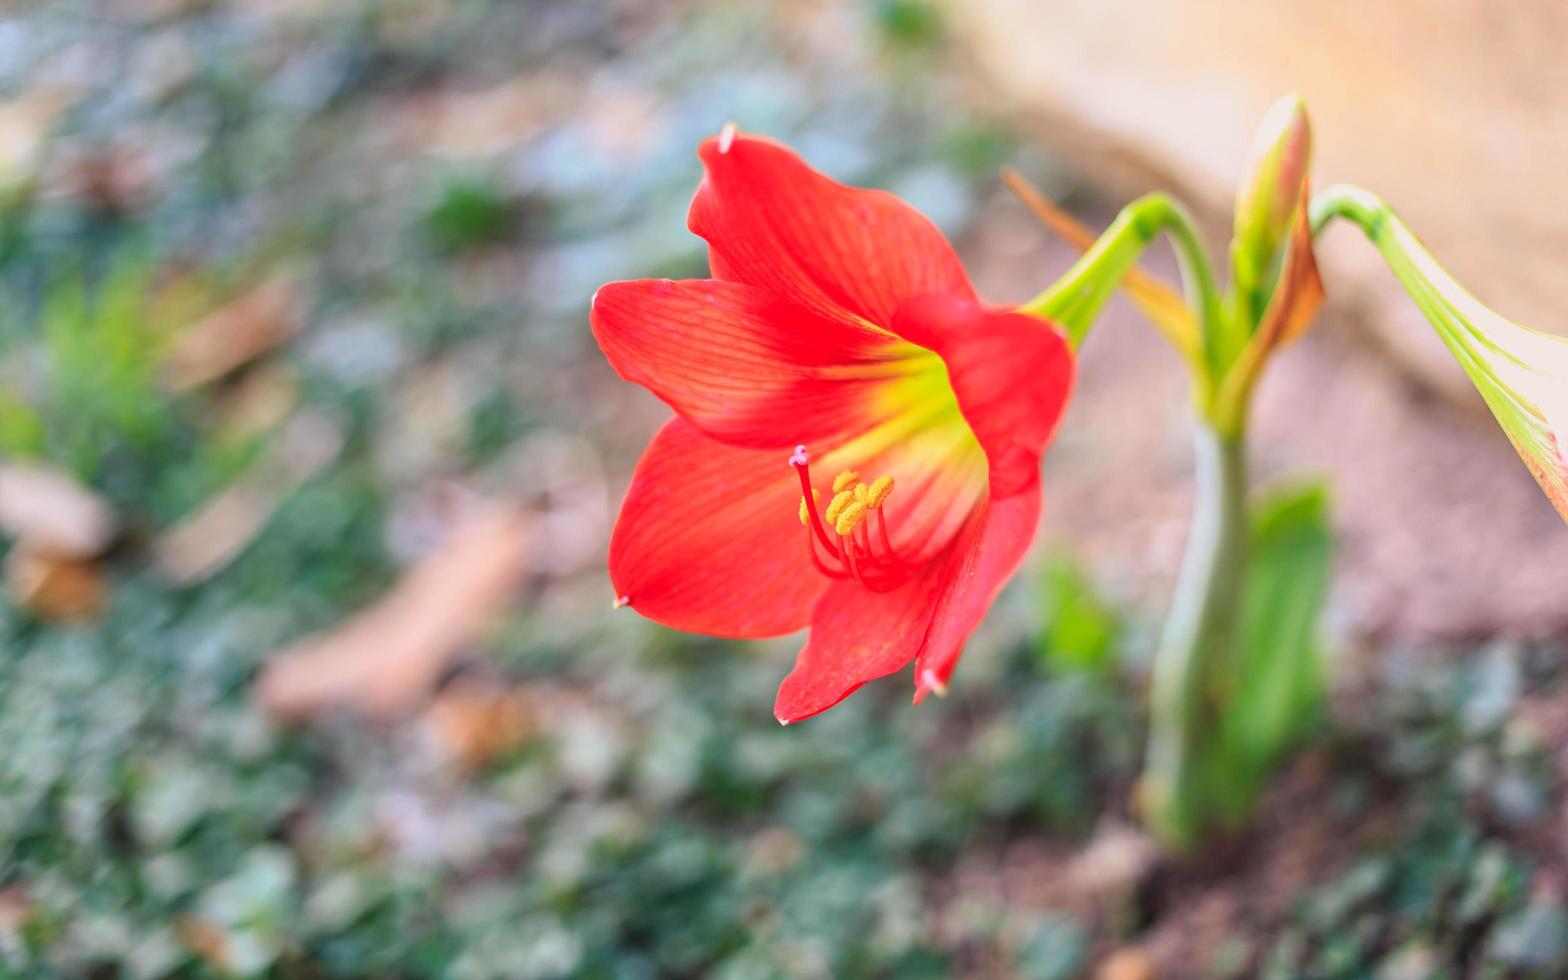 bellissimo fiore hippeastrum johnsonii o fiore rosso foto